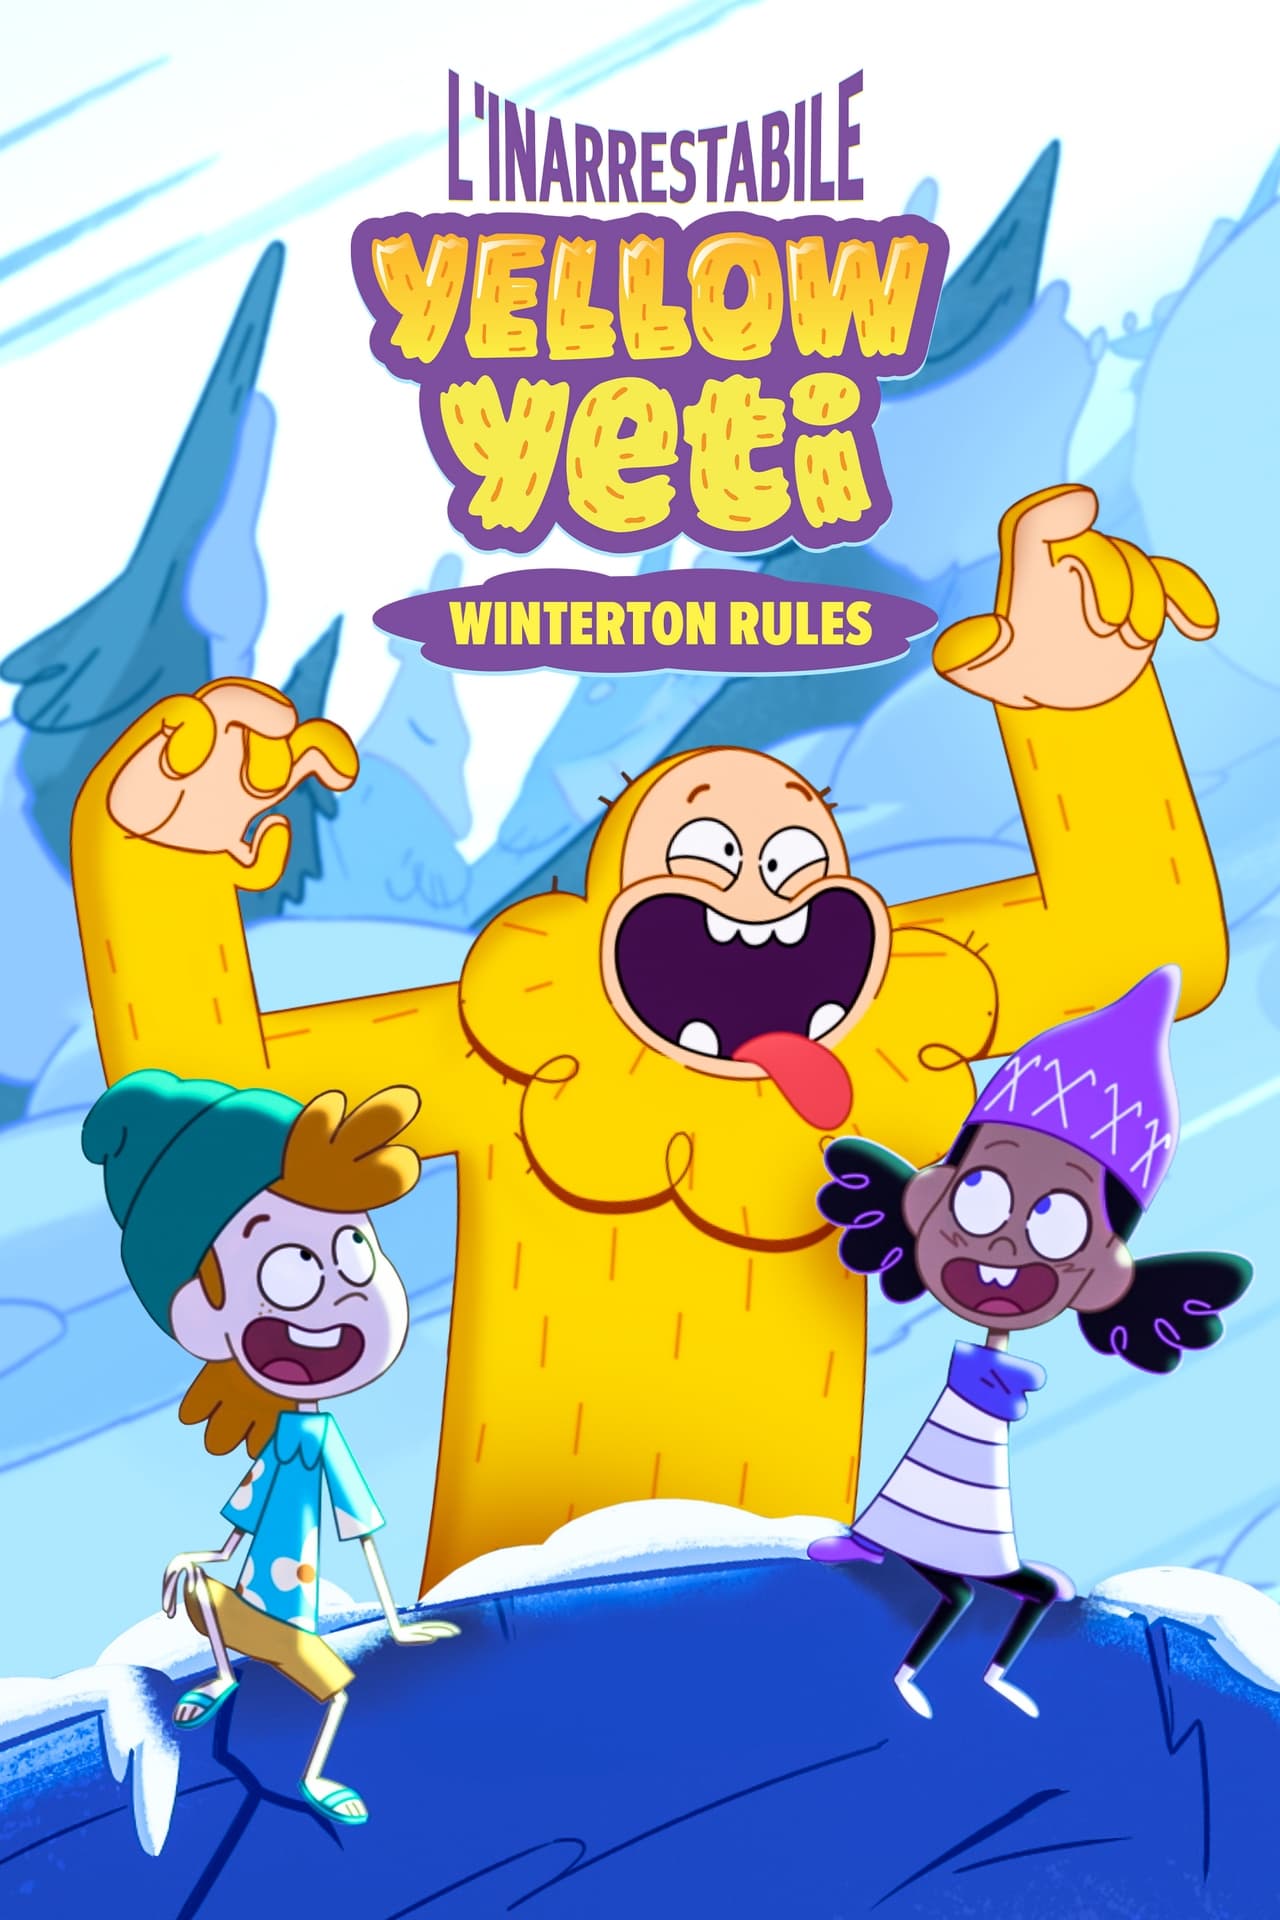 The Unstoppable Yellow Yeti: Winterton Rules film